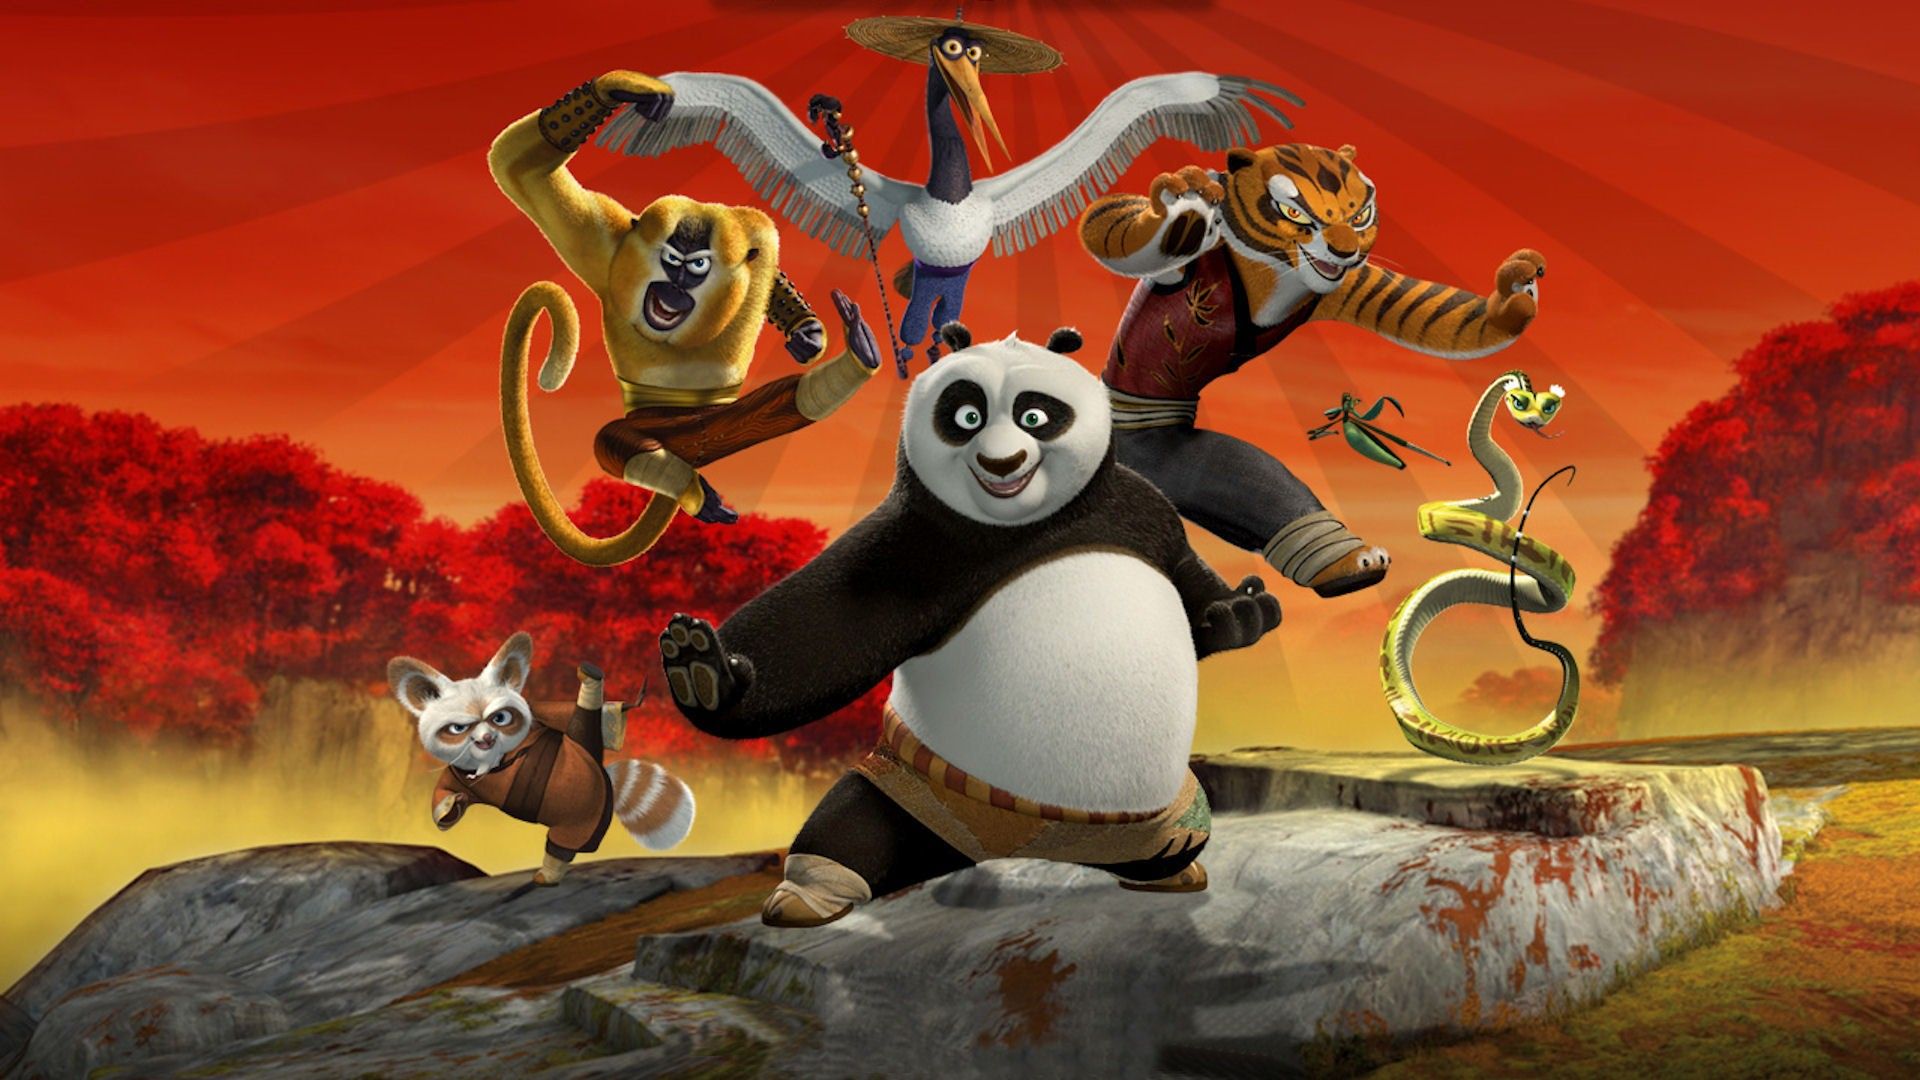 Kung Fu Panda Wallpaper Background 7571 1920 x 1080 ...